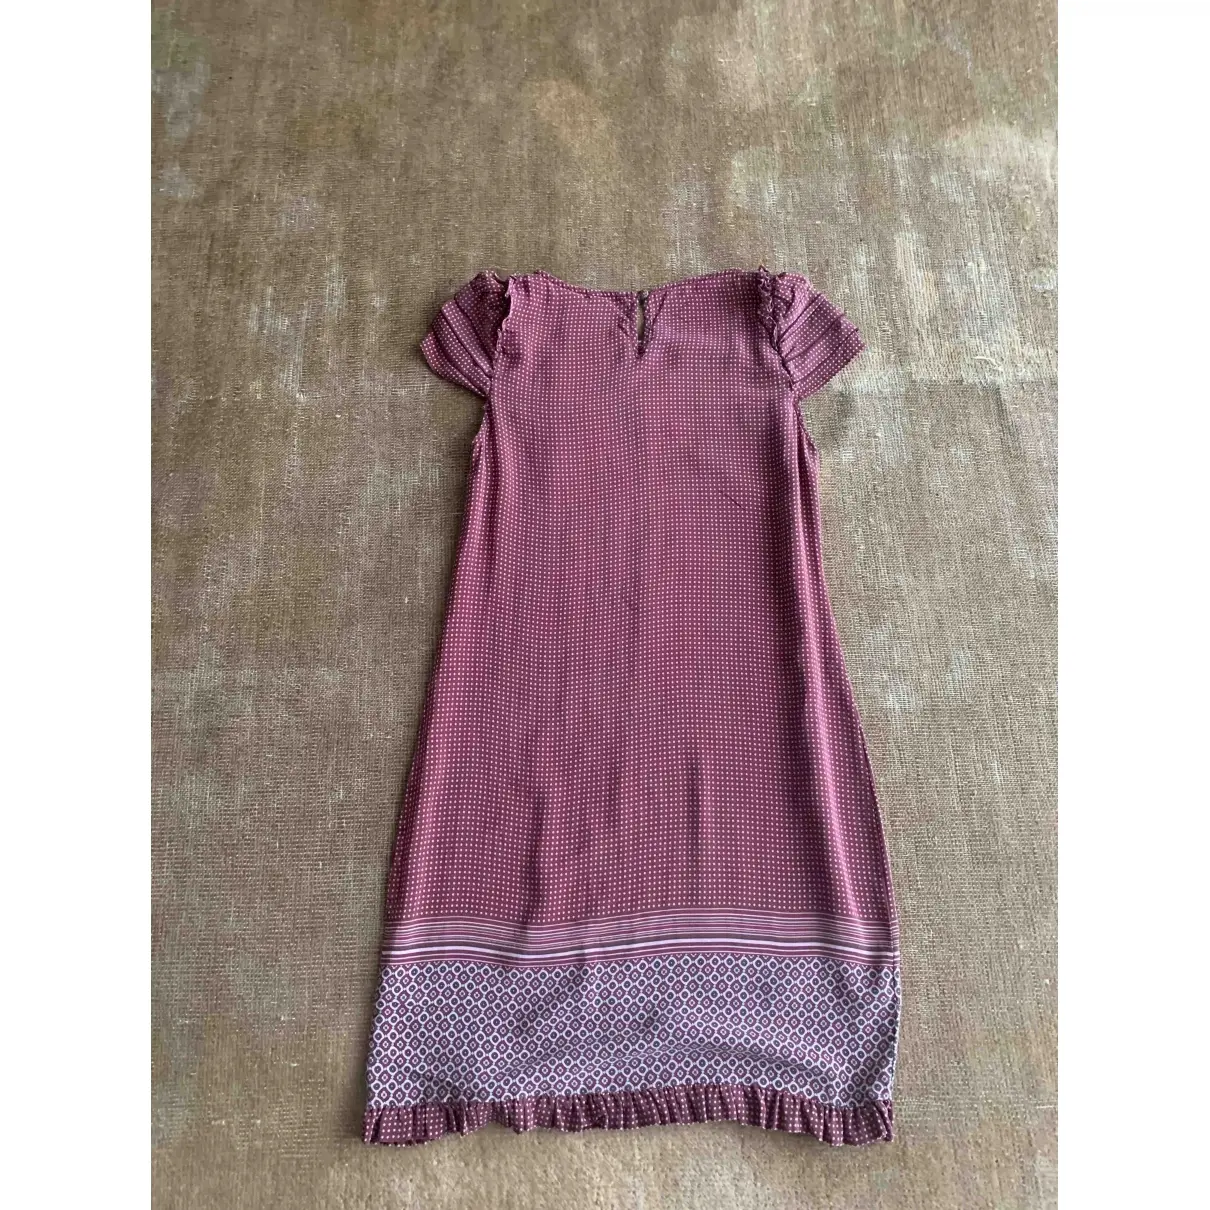 Massimo Dutti Silk dress for sale